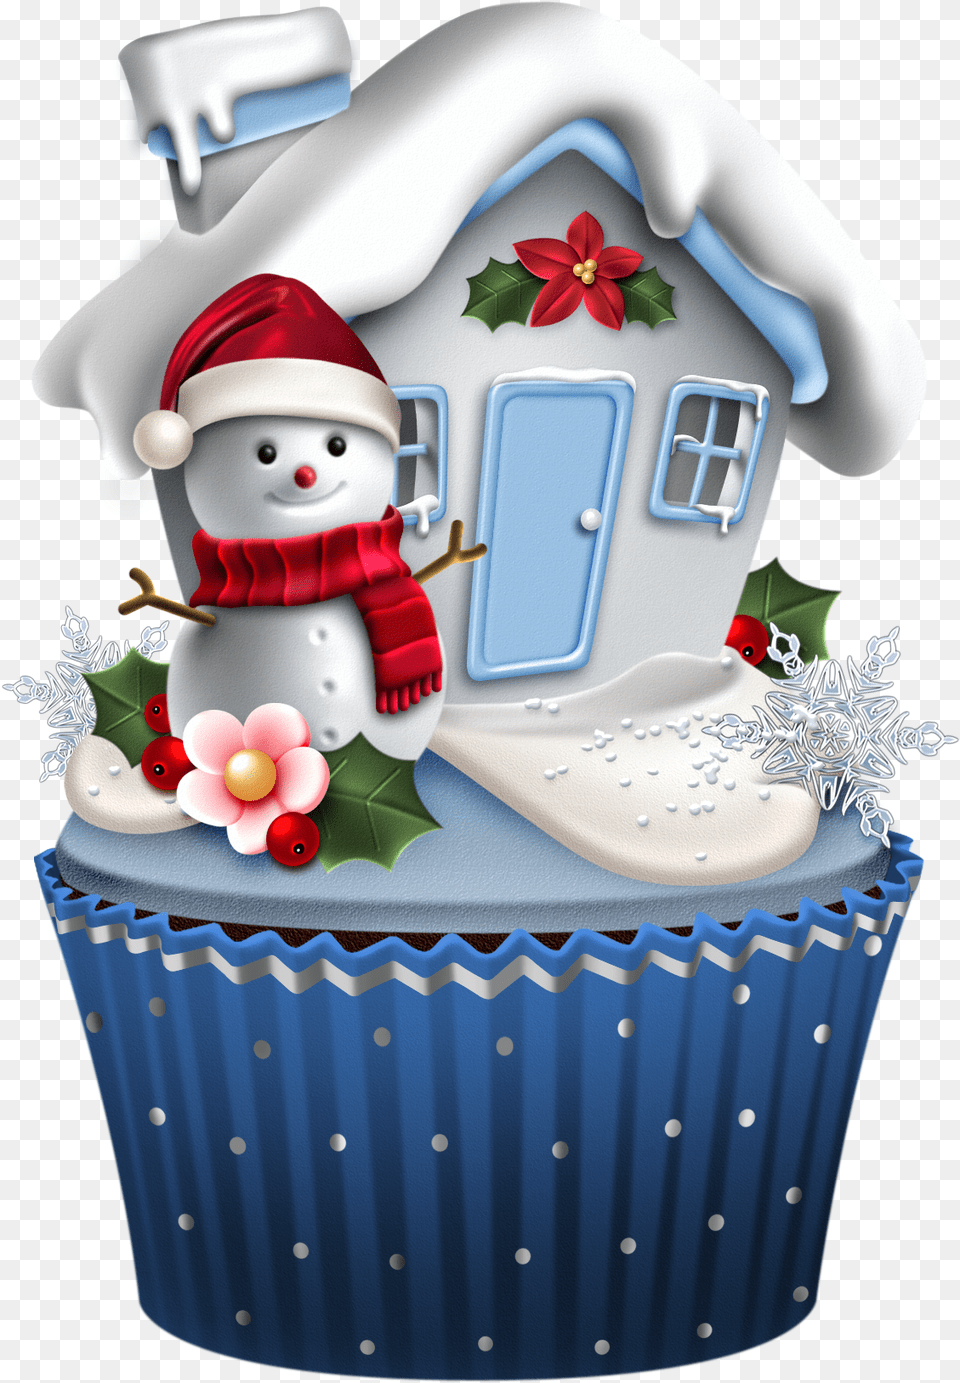 U Cupcake Clipart Cupcake Art Bild Tag Christmas Day, Outdoors, Nature, Birthday Cake, Food Png